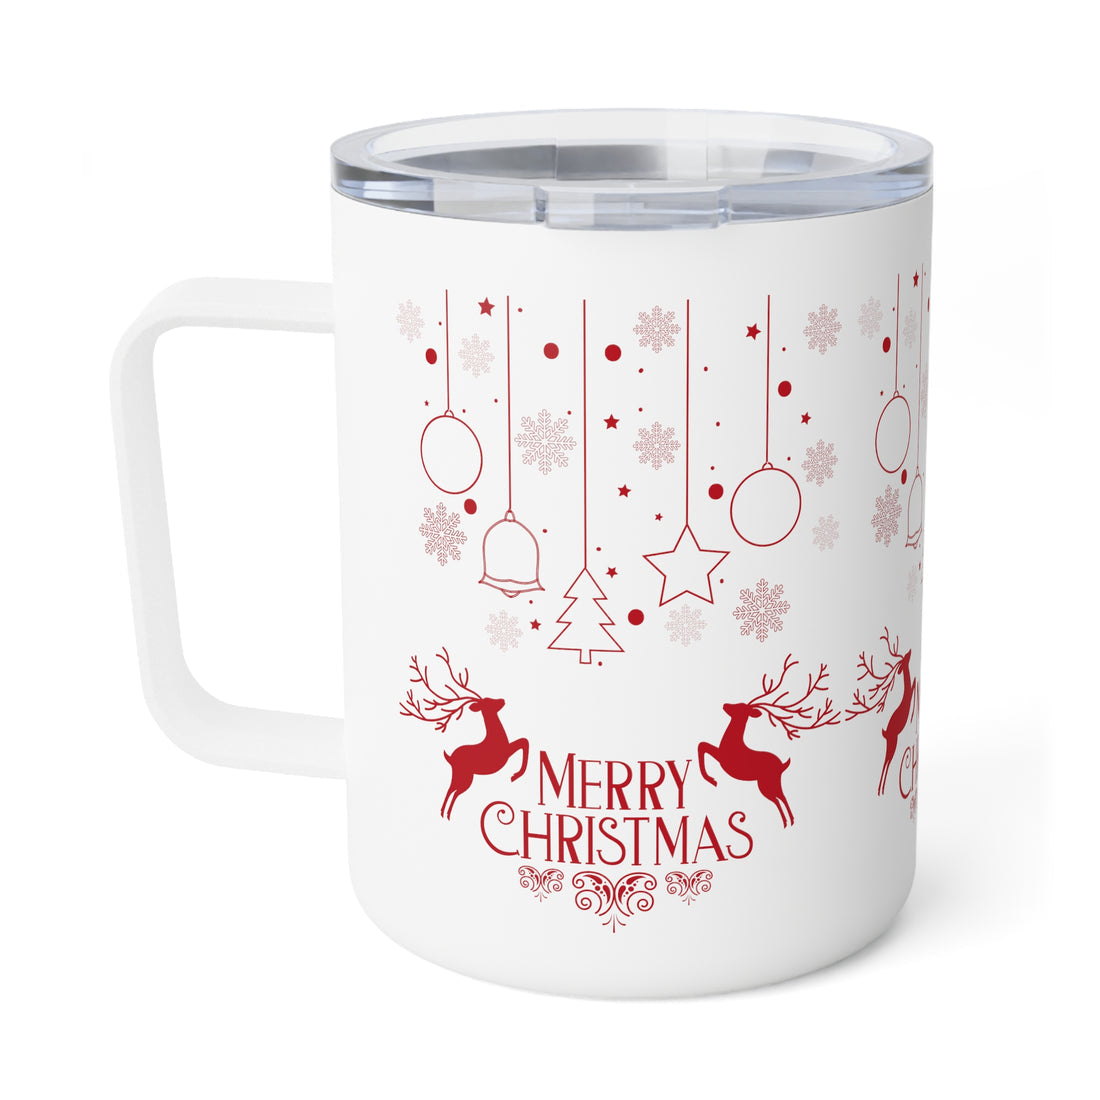 Christmas Insulated Travel Coffee Mugs, 10 oz